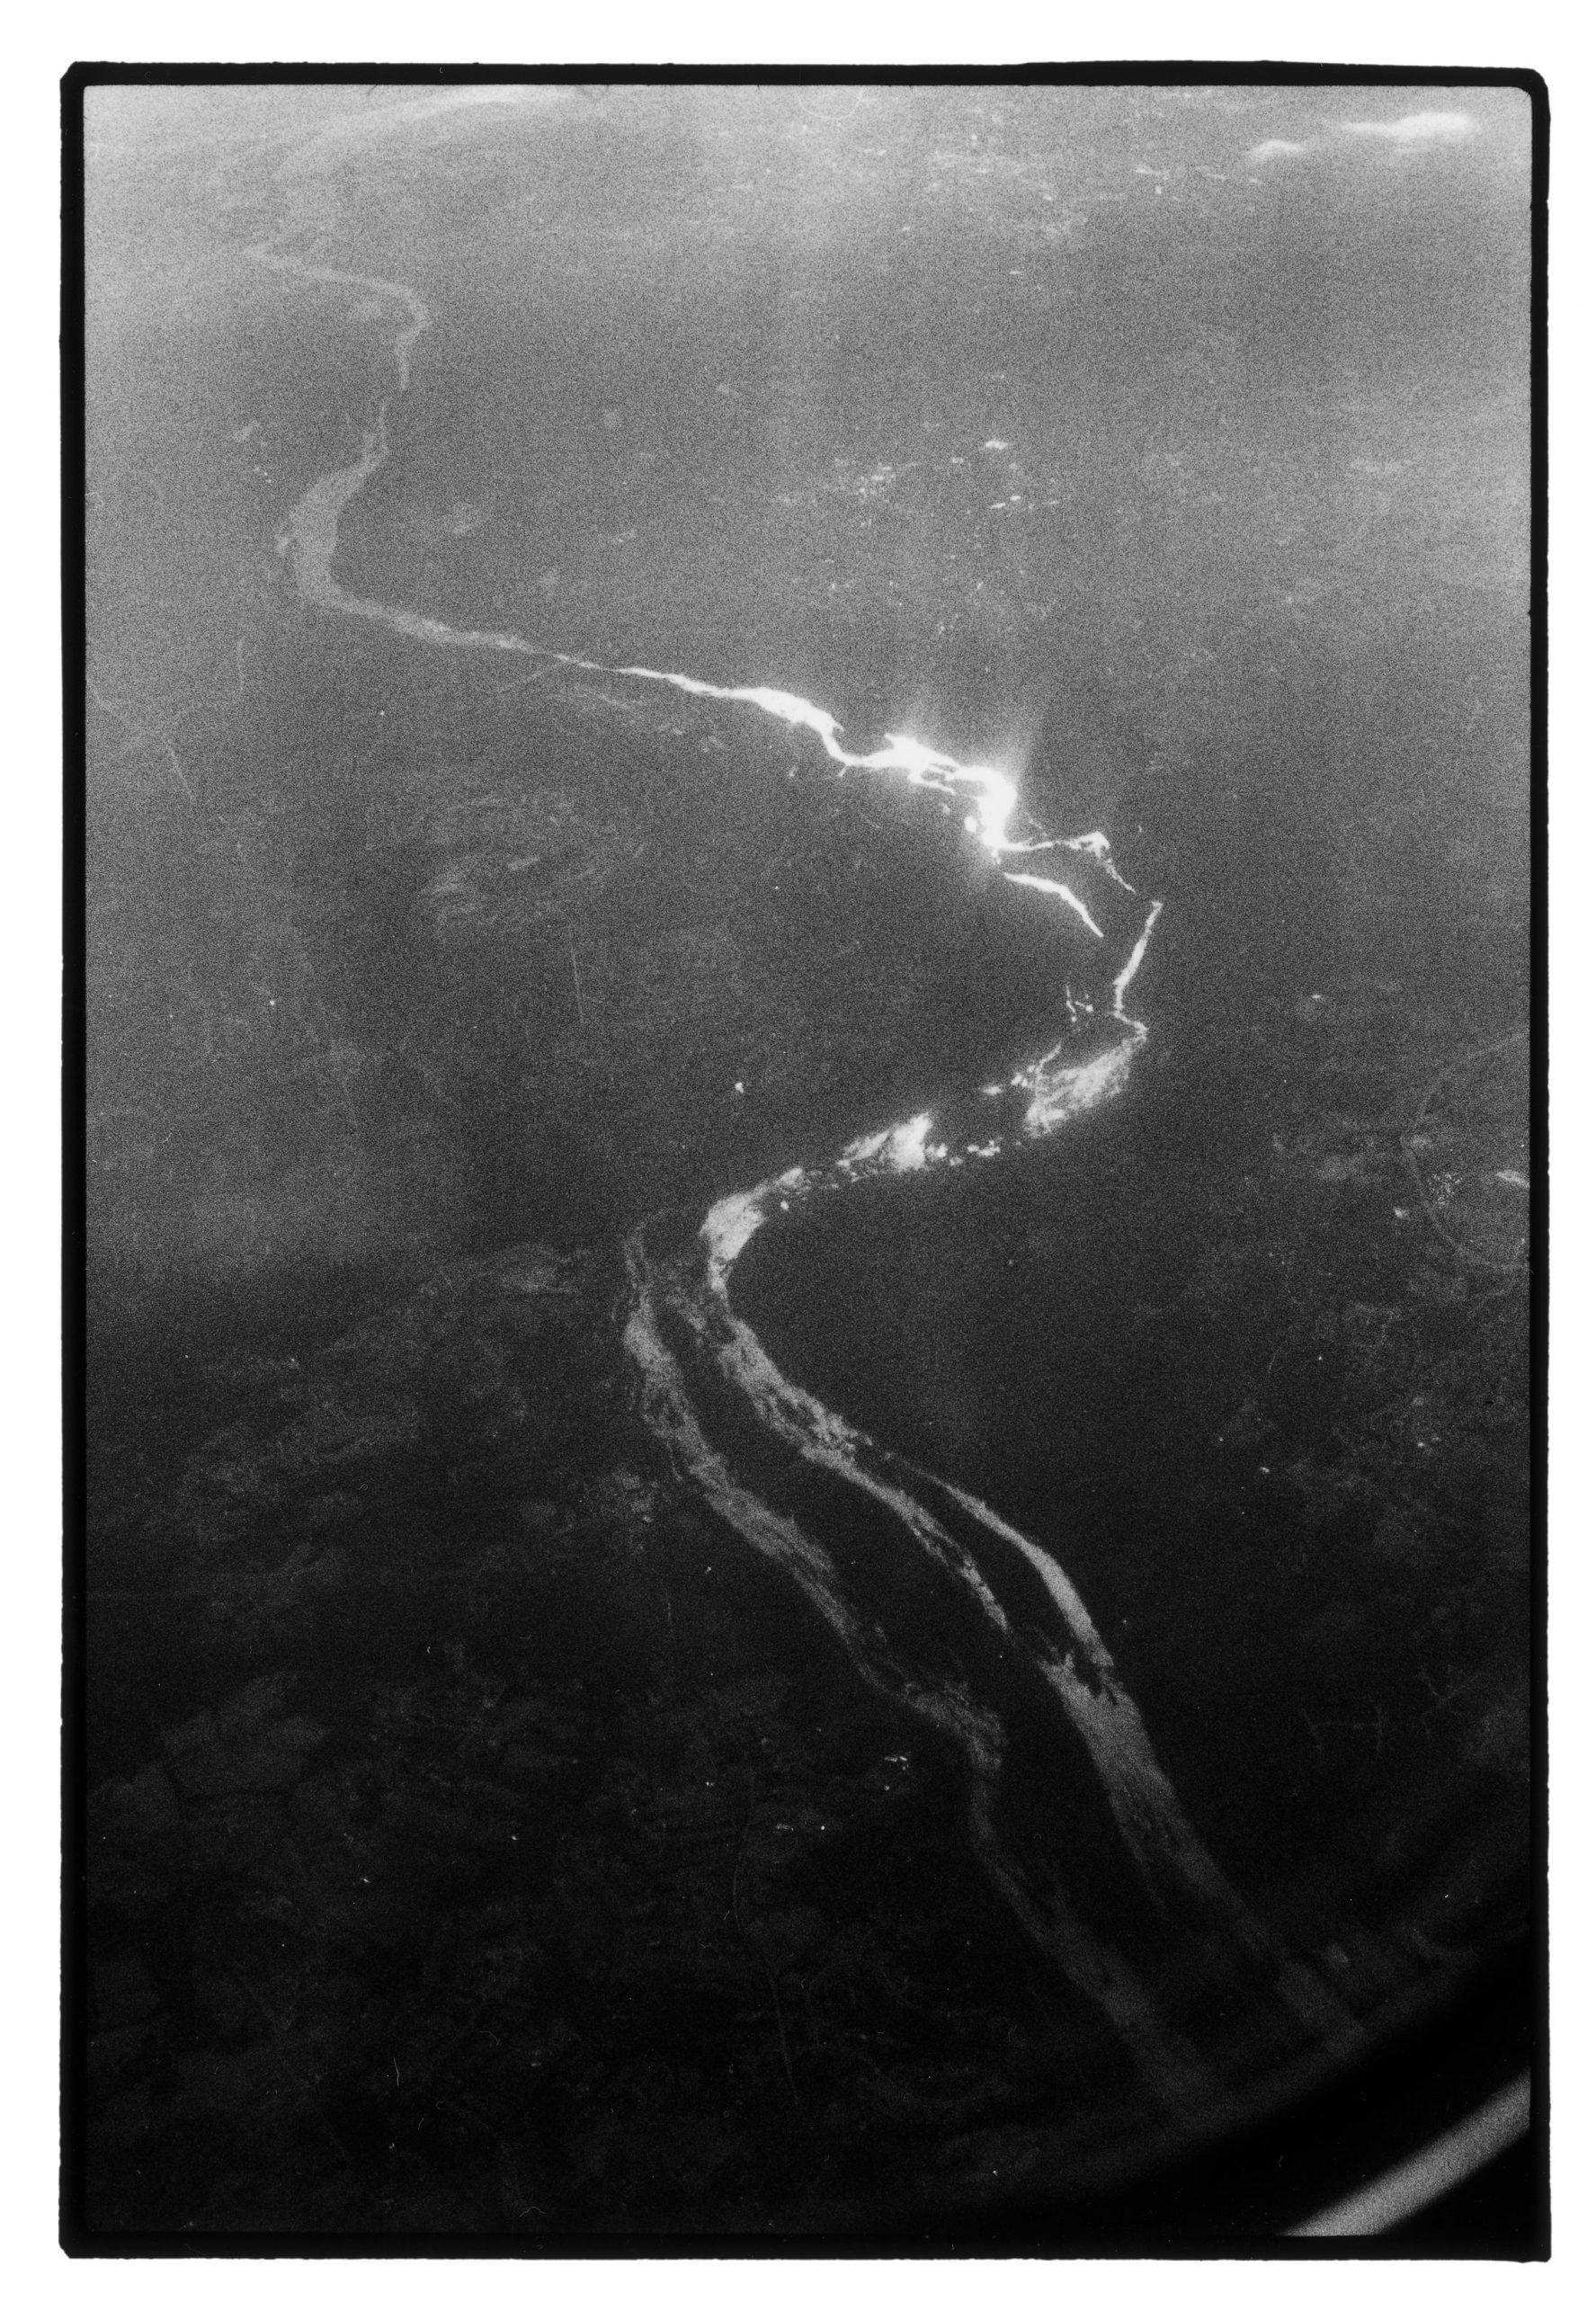 Zoe Leonard, Untitled Aerial, 1988/2008, Gelatin silver print 86 x 61 cm. © Zoe Leonard. Courtesy the artist and Hauser & Wirth